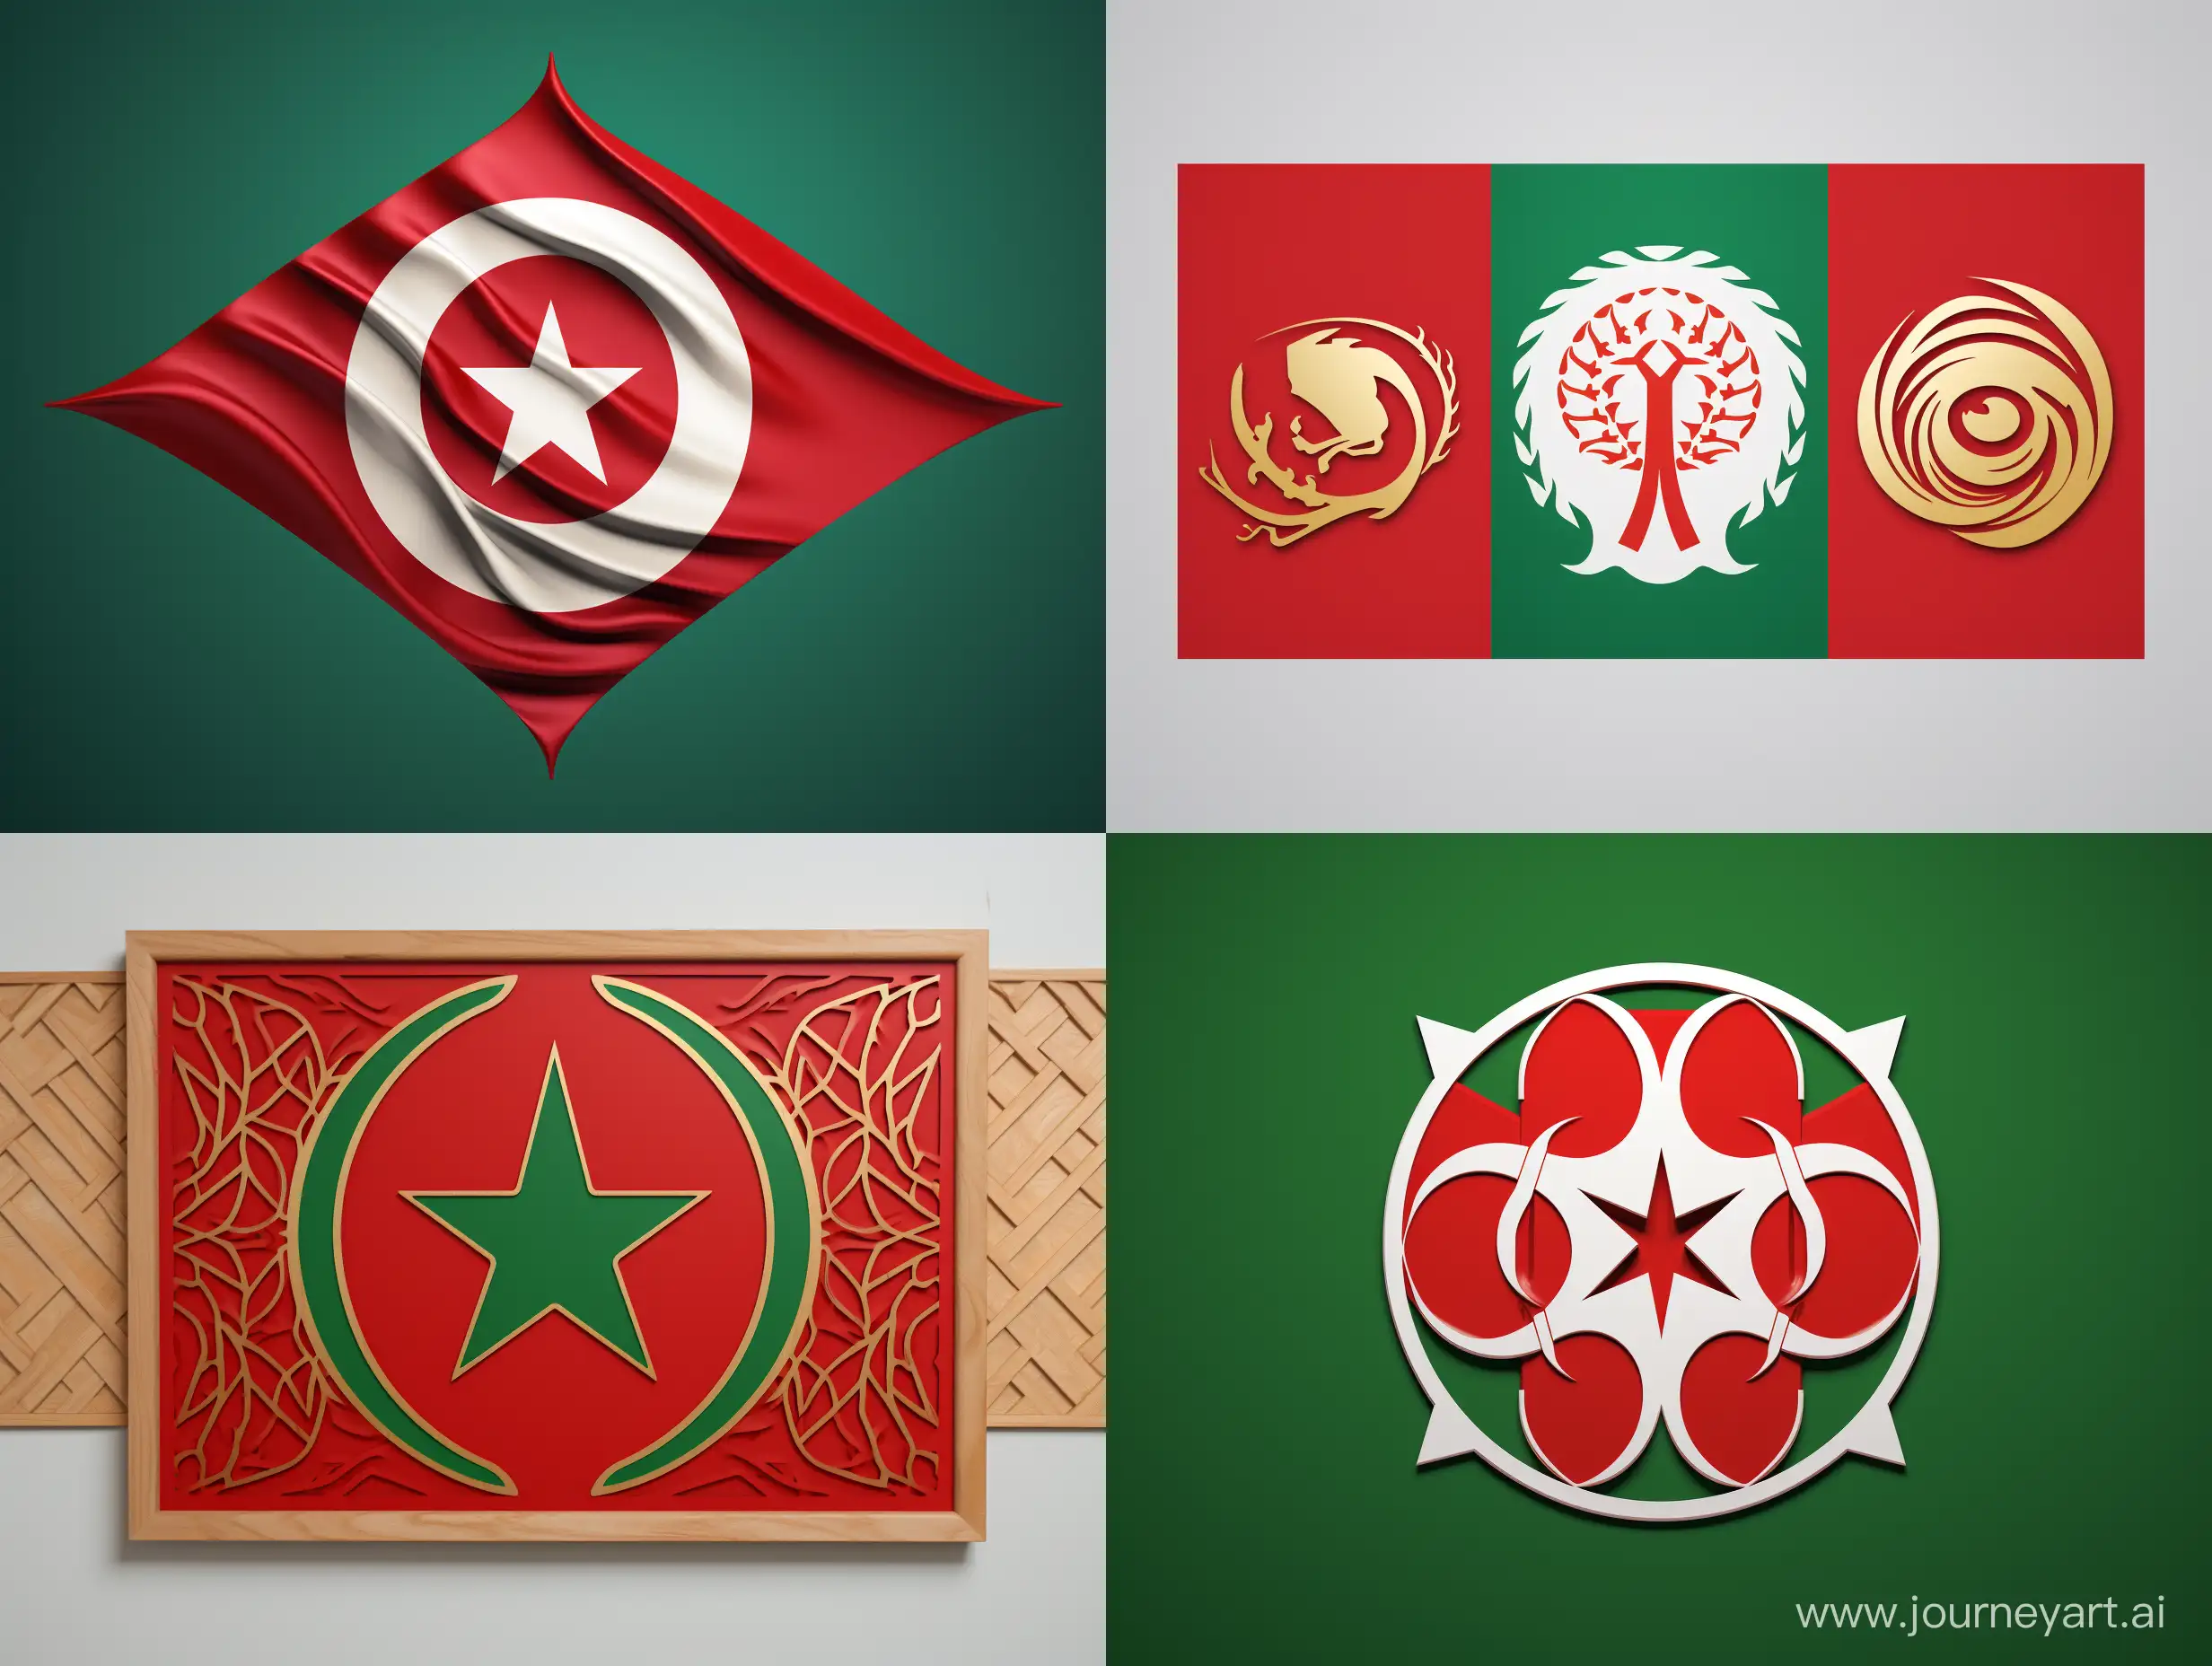 United-Flags-of-Morocco-Algeria-and-Tunisia-Logo-Design